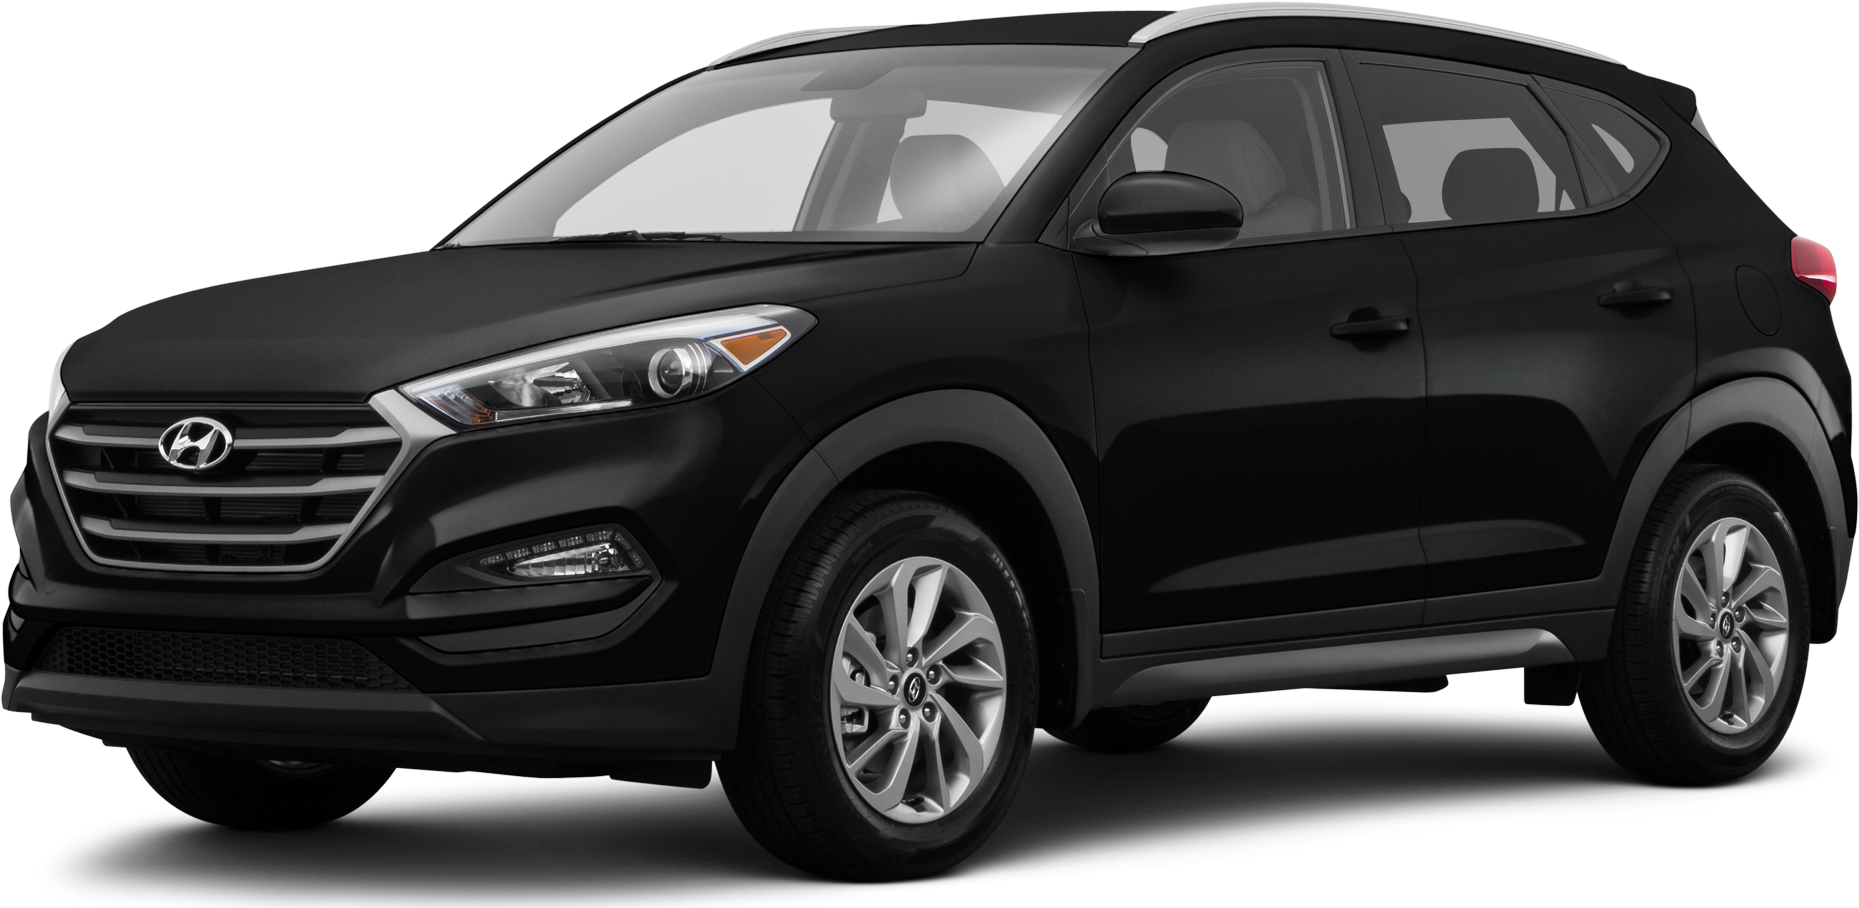 Hyundai Tucson 2016 Review  carsalescomau